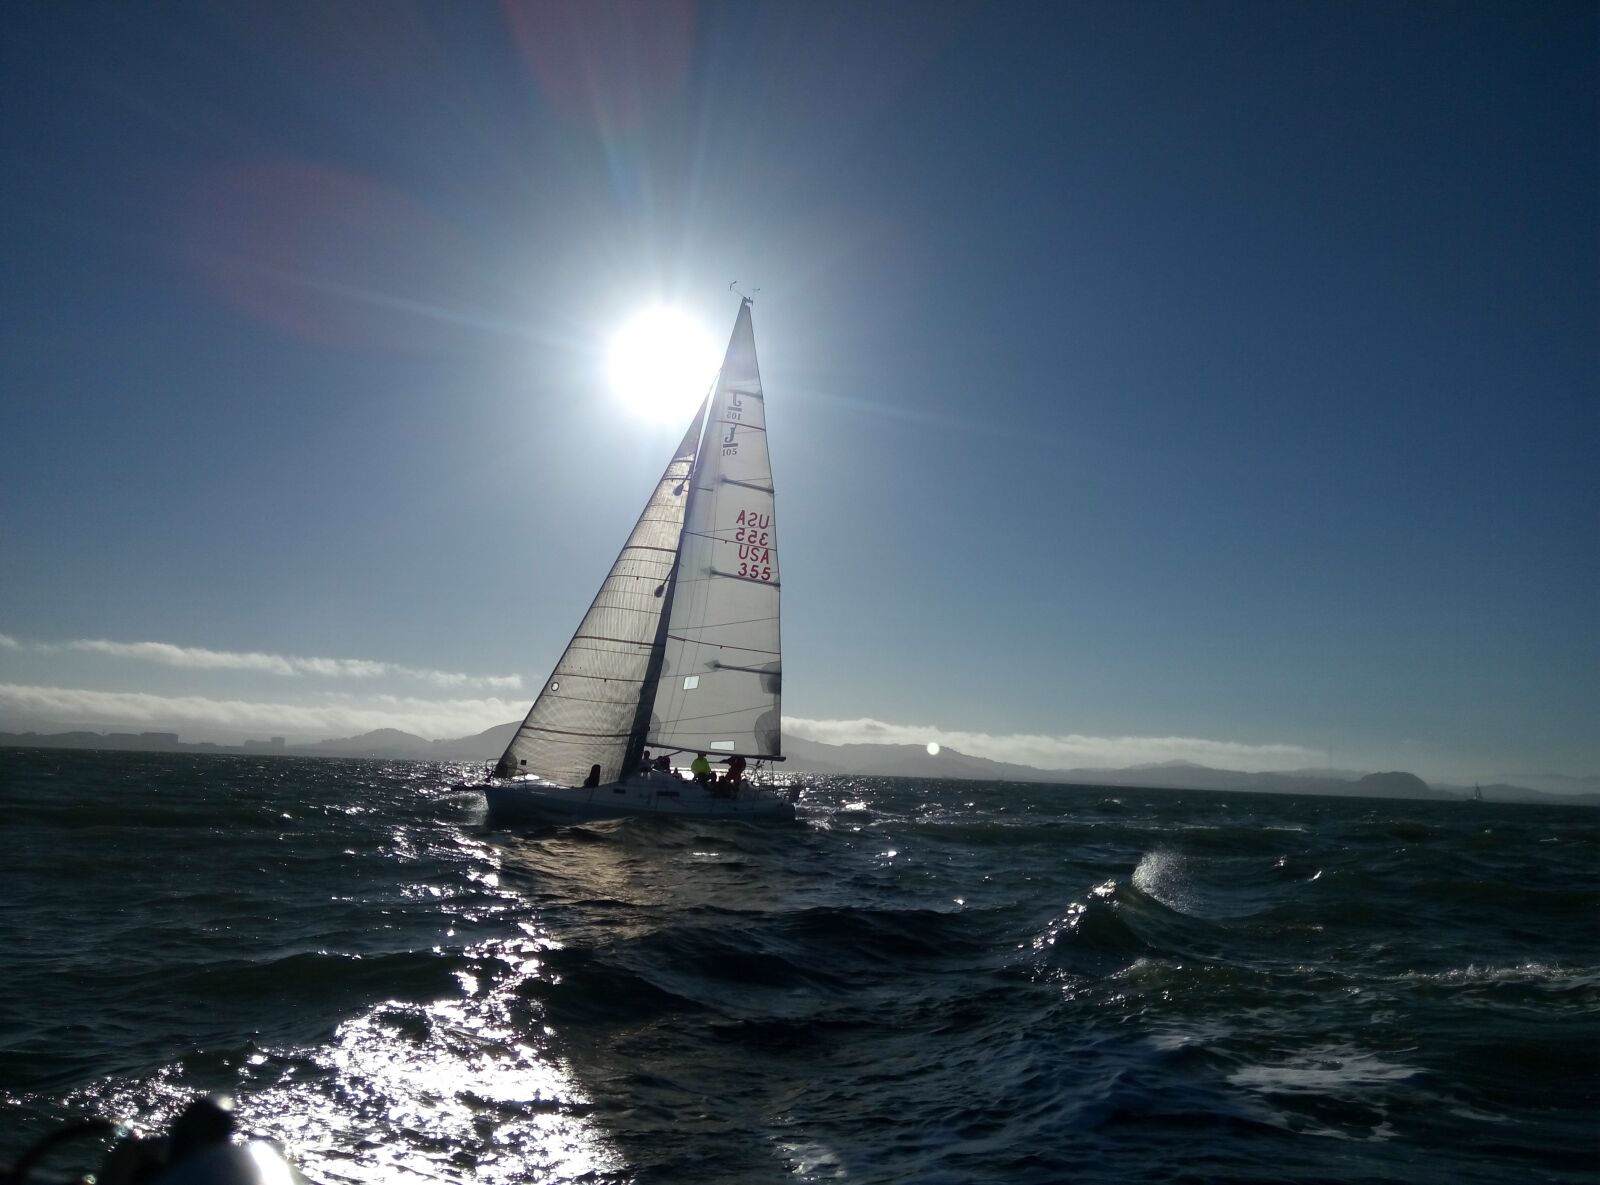 Meizu m2 sample photo. Sailing, racing, regatta photography